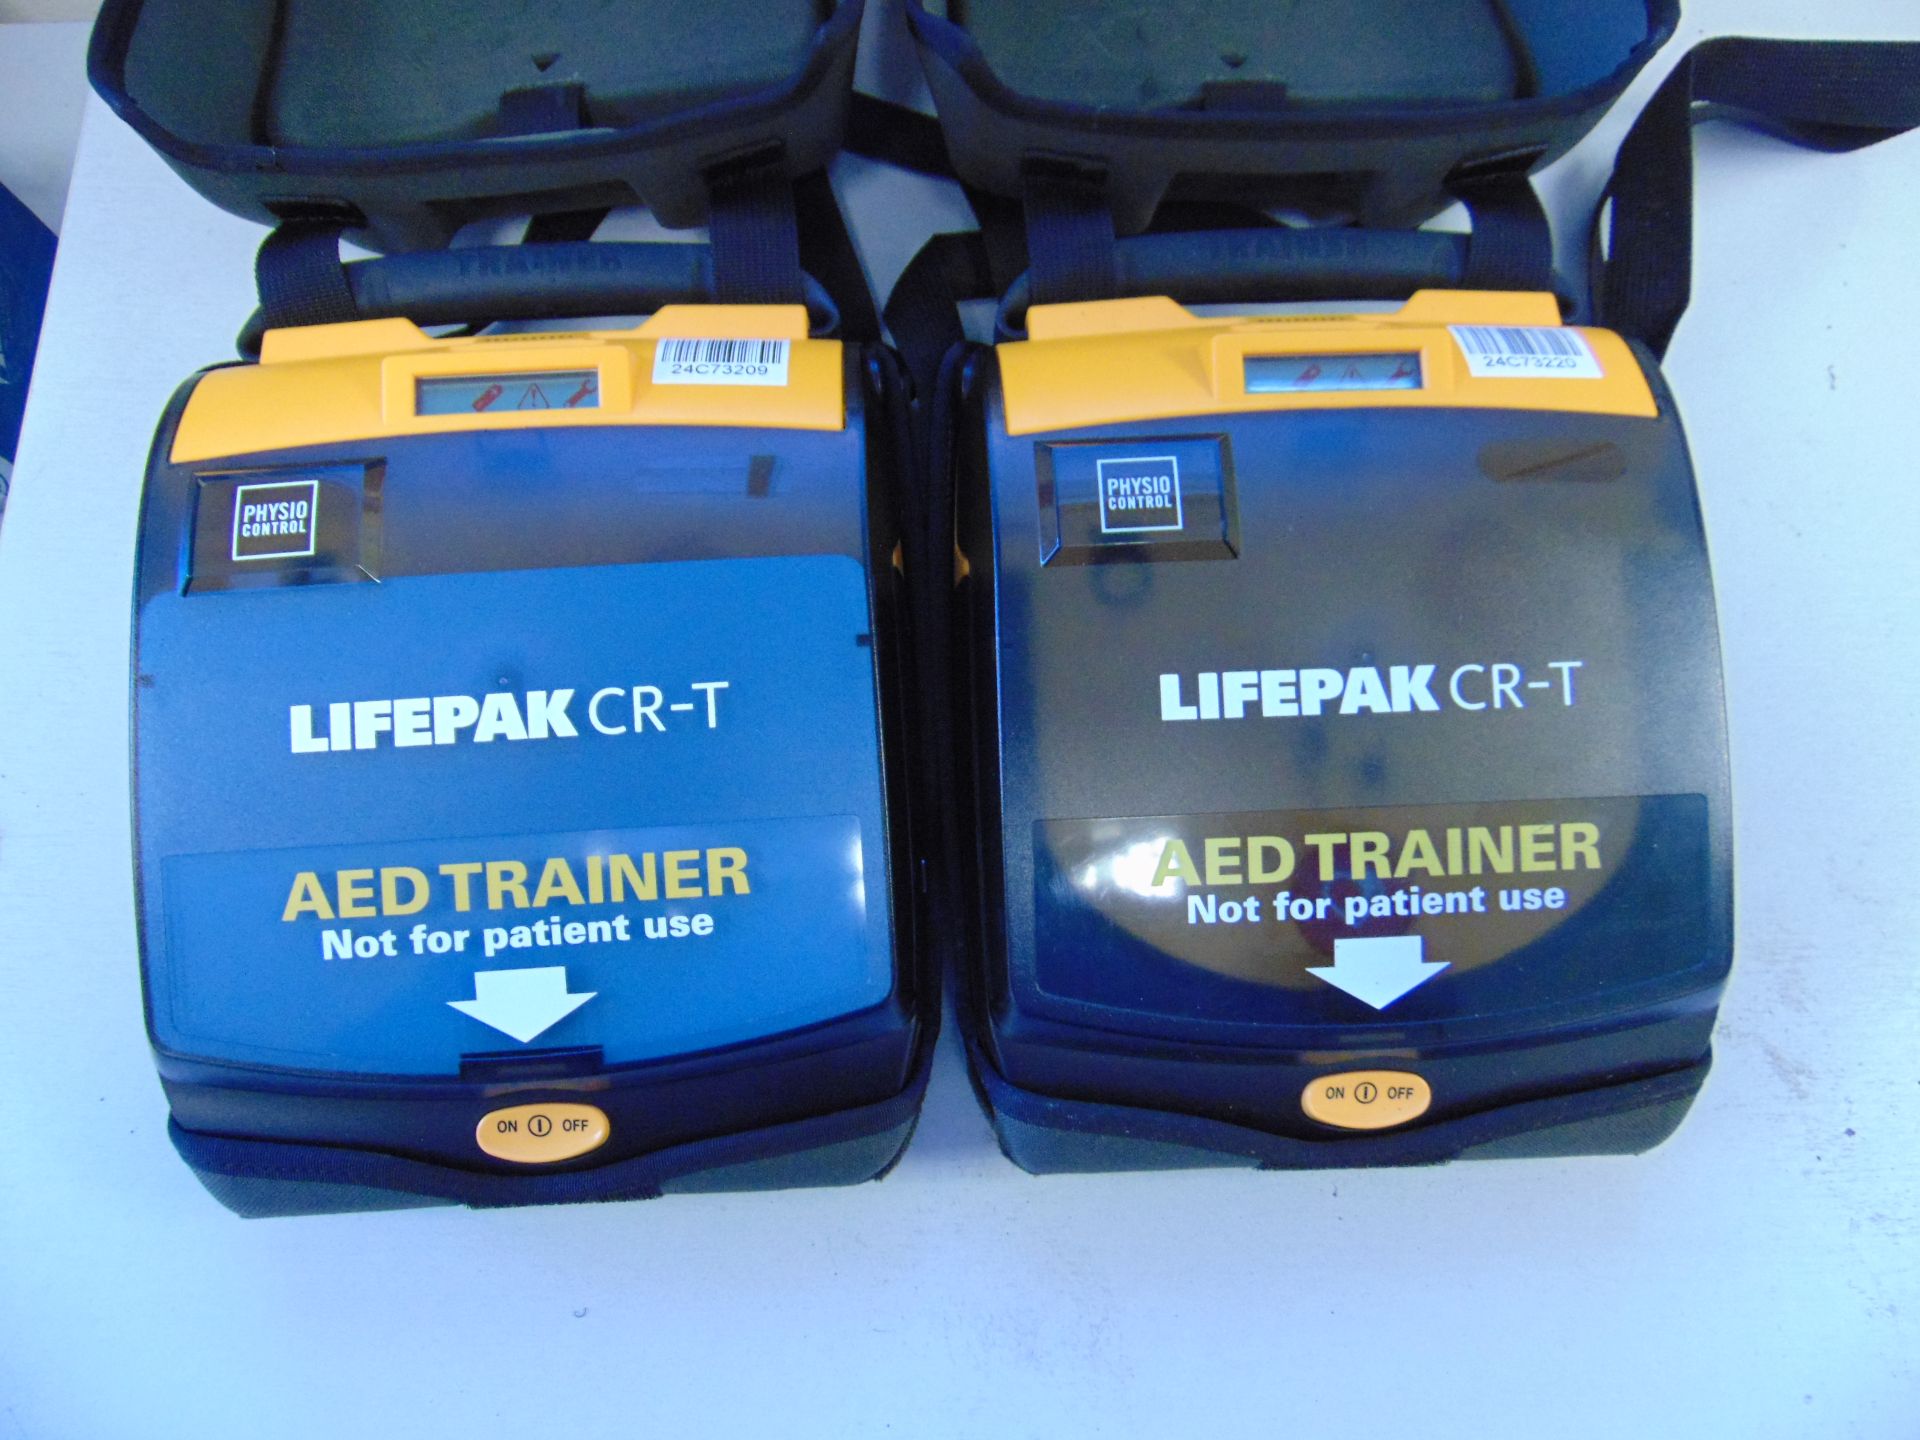 2 x Physio Controls Lifepak CR-T Defibrillator AED Trainer Unit in Carry Case - Image 3 of 4